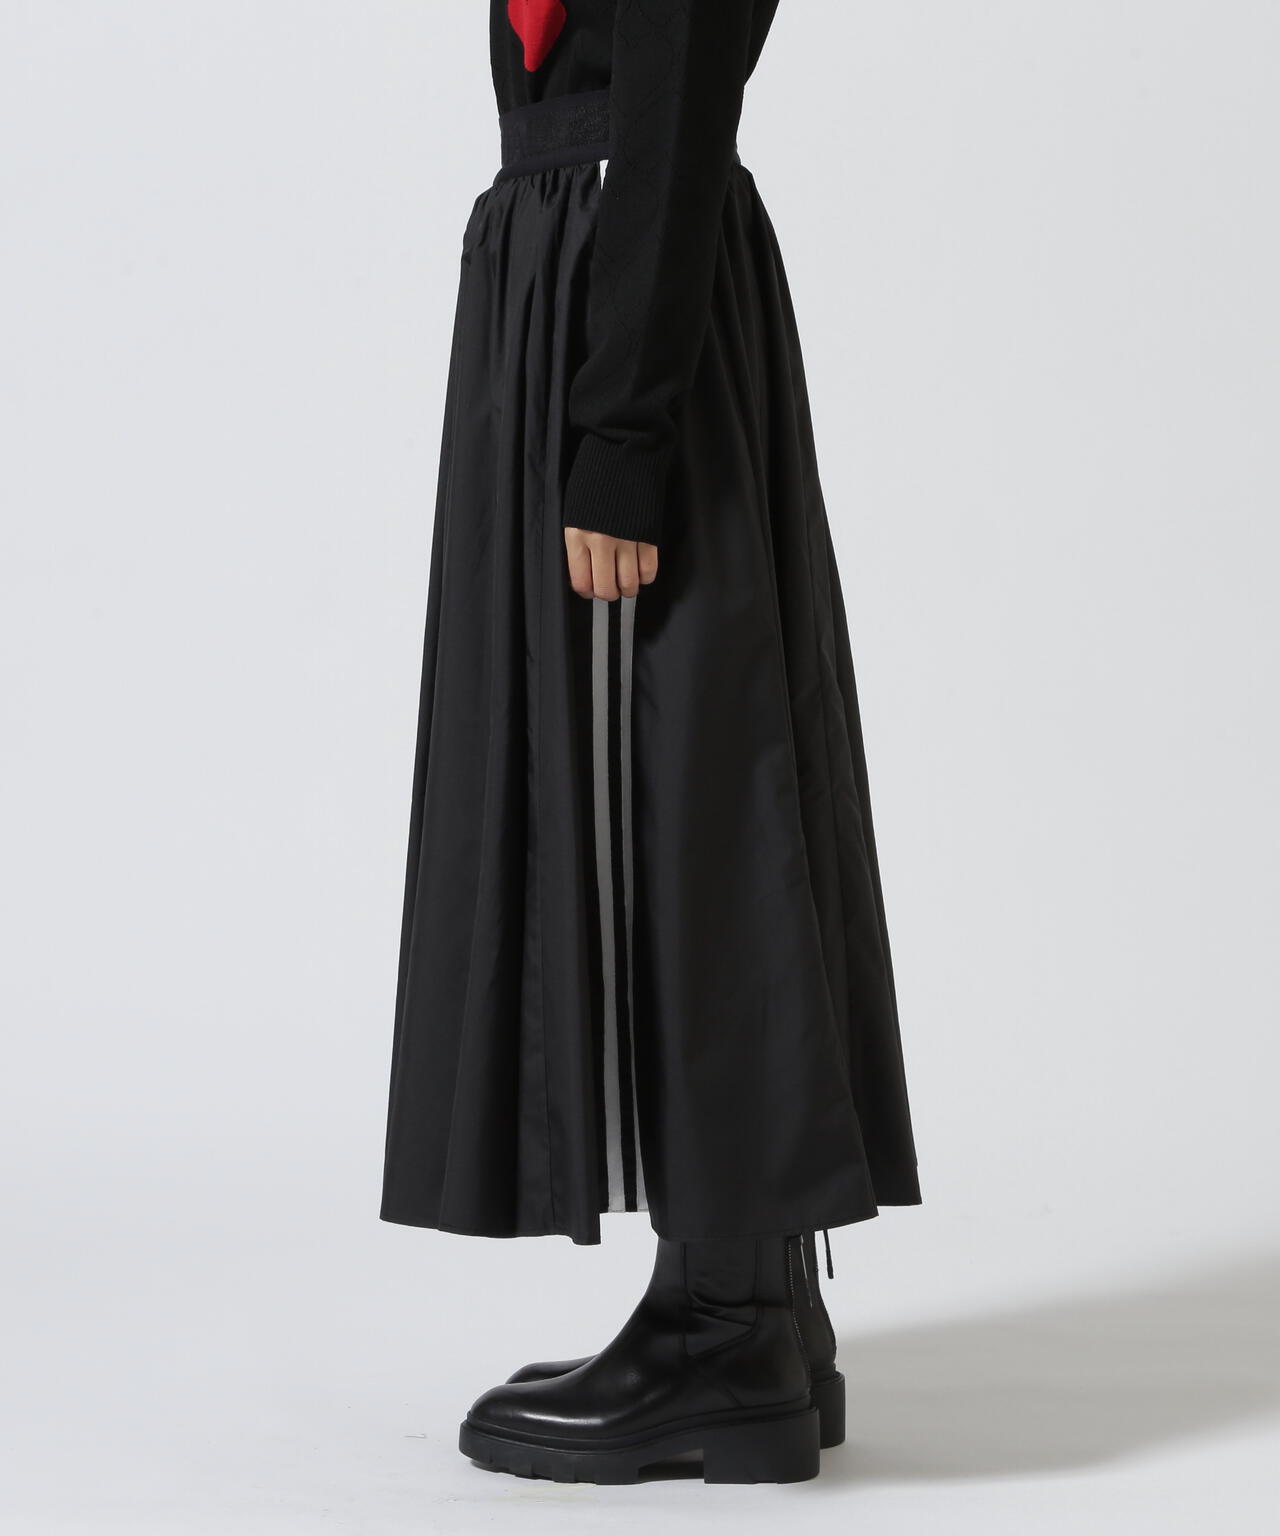 marihaダブルスタンダードクロージング 41,800円今期完売レトロフラワースカート